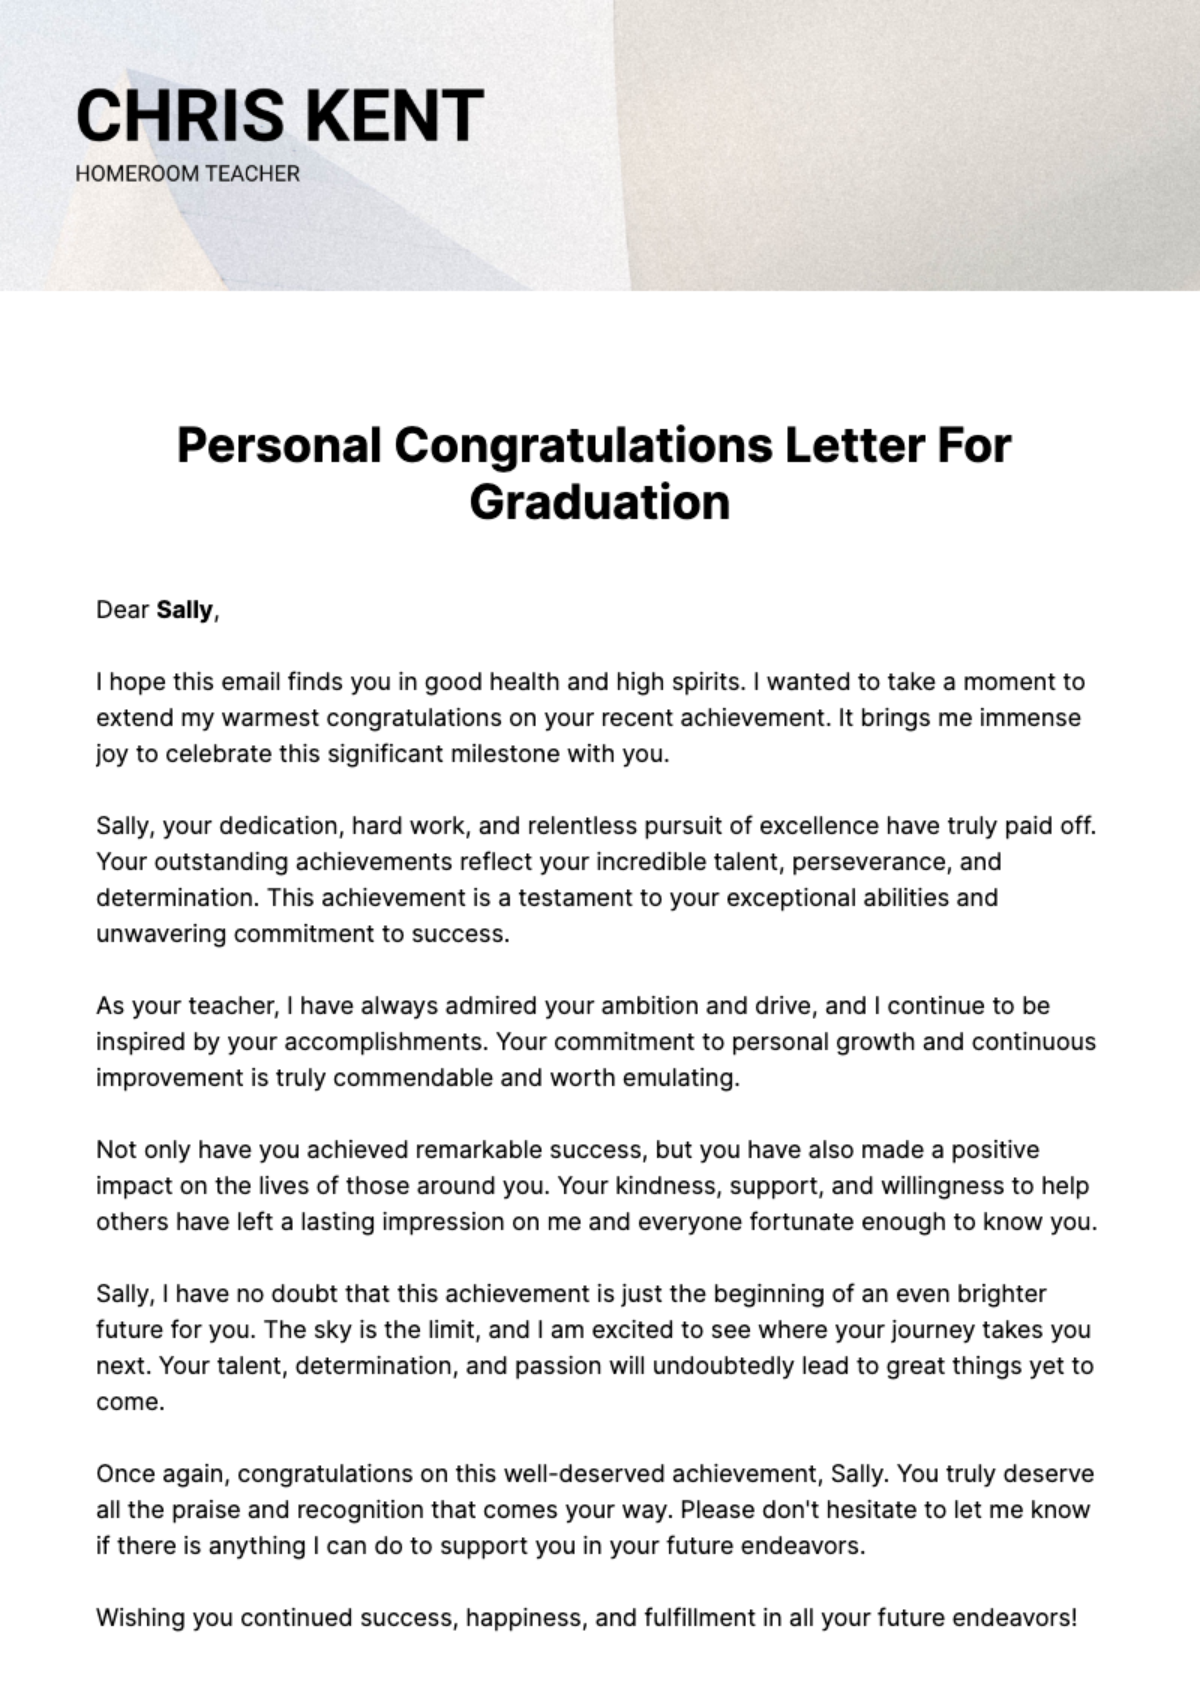 Personal Congratulations Letter for Graduation  Template